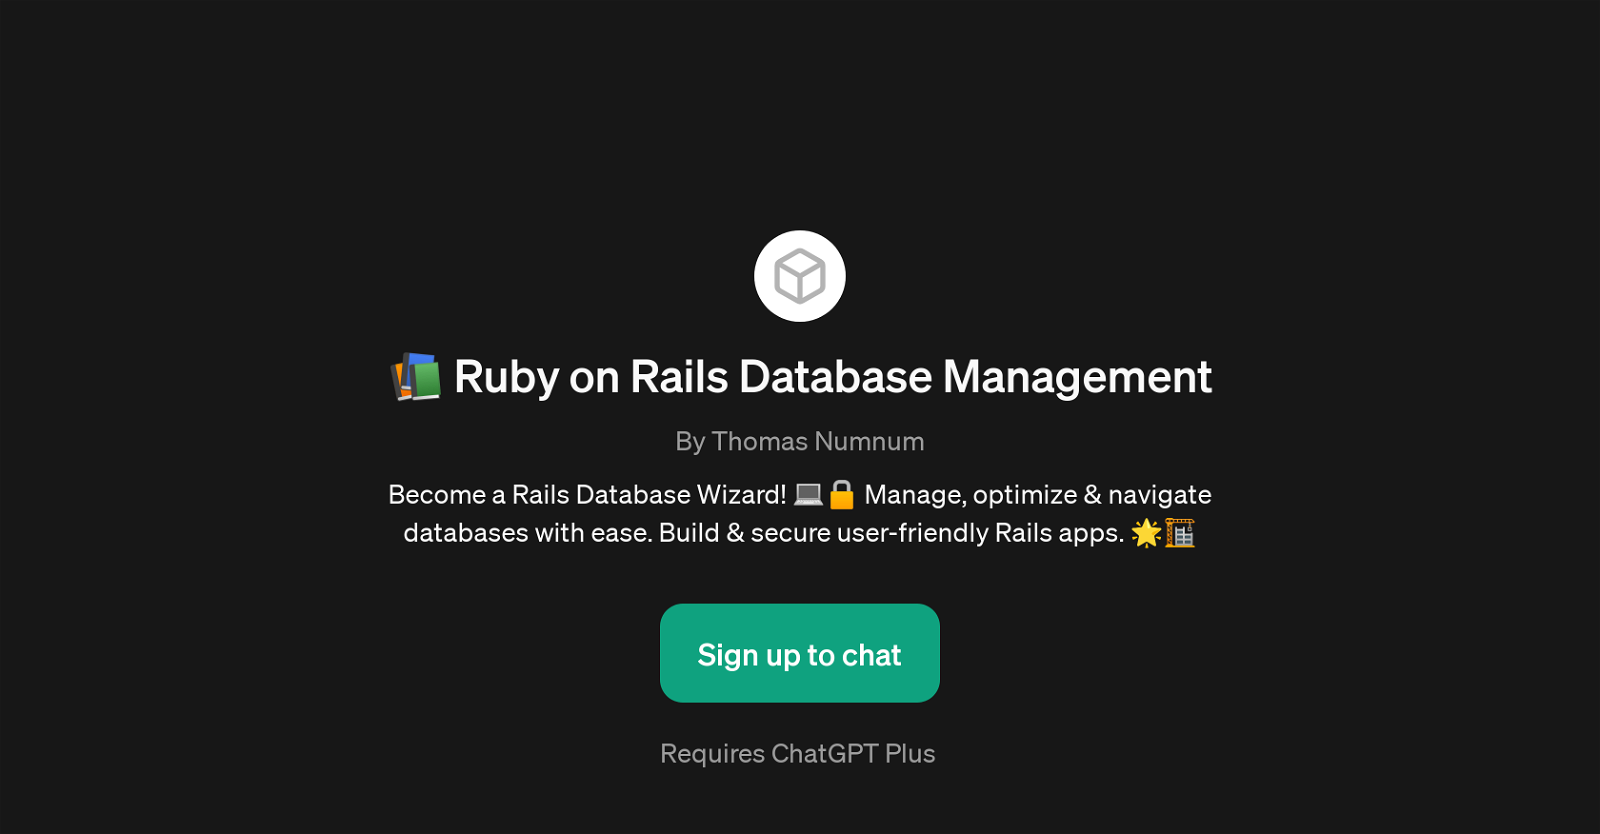 Ruby on Rails Database Management website